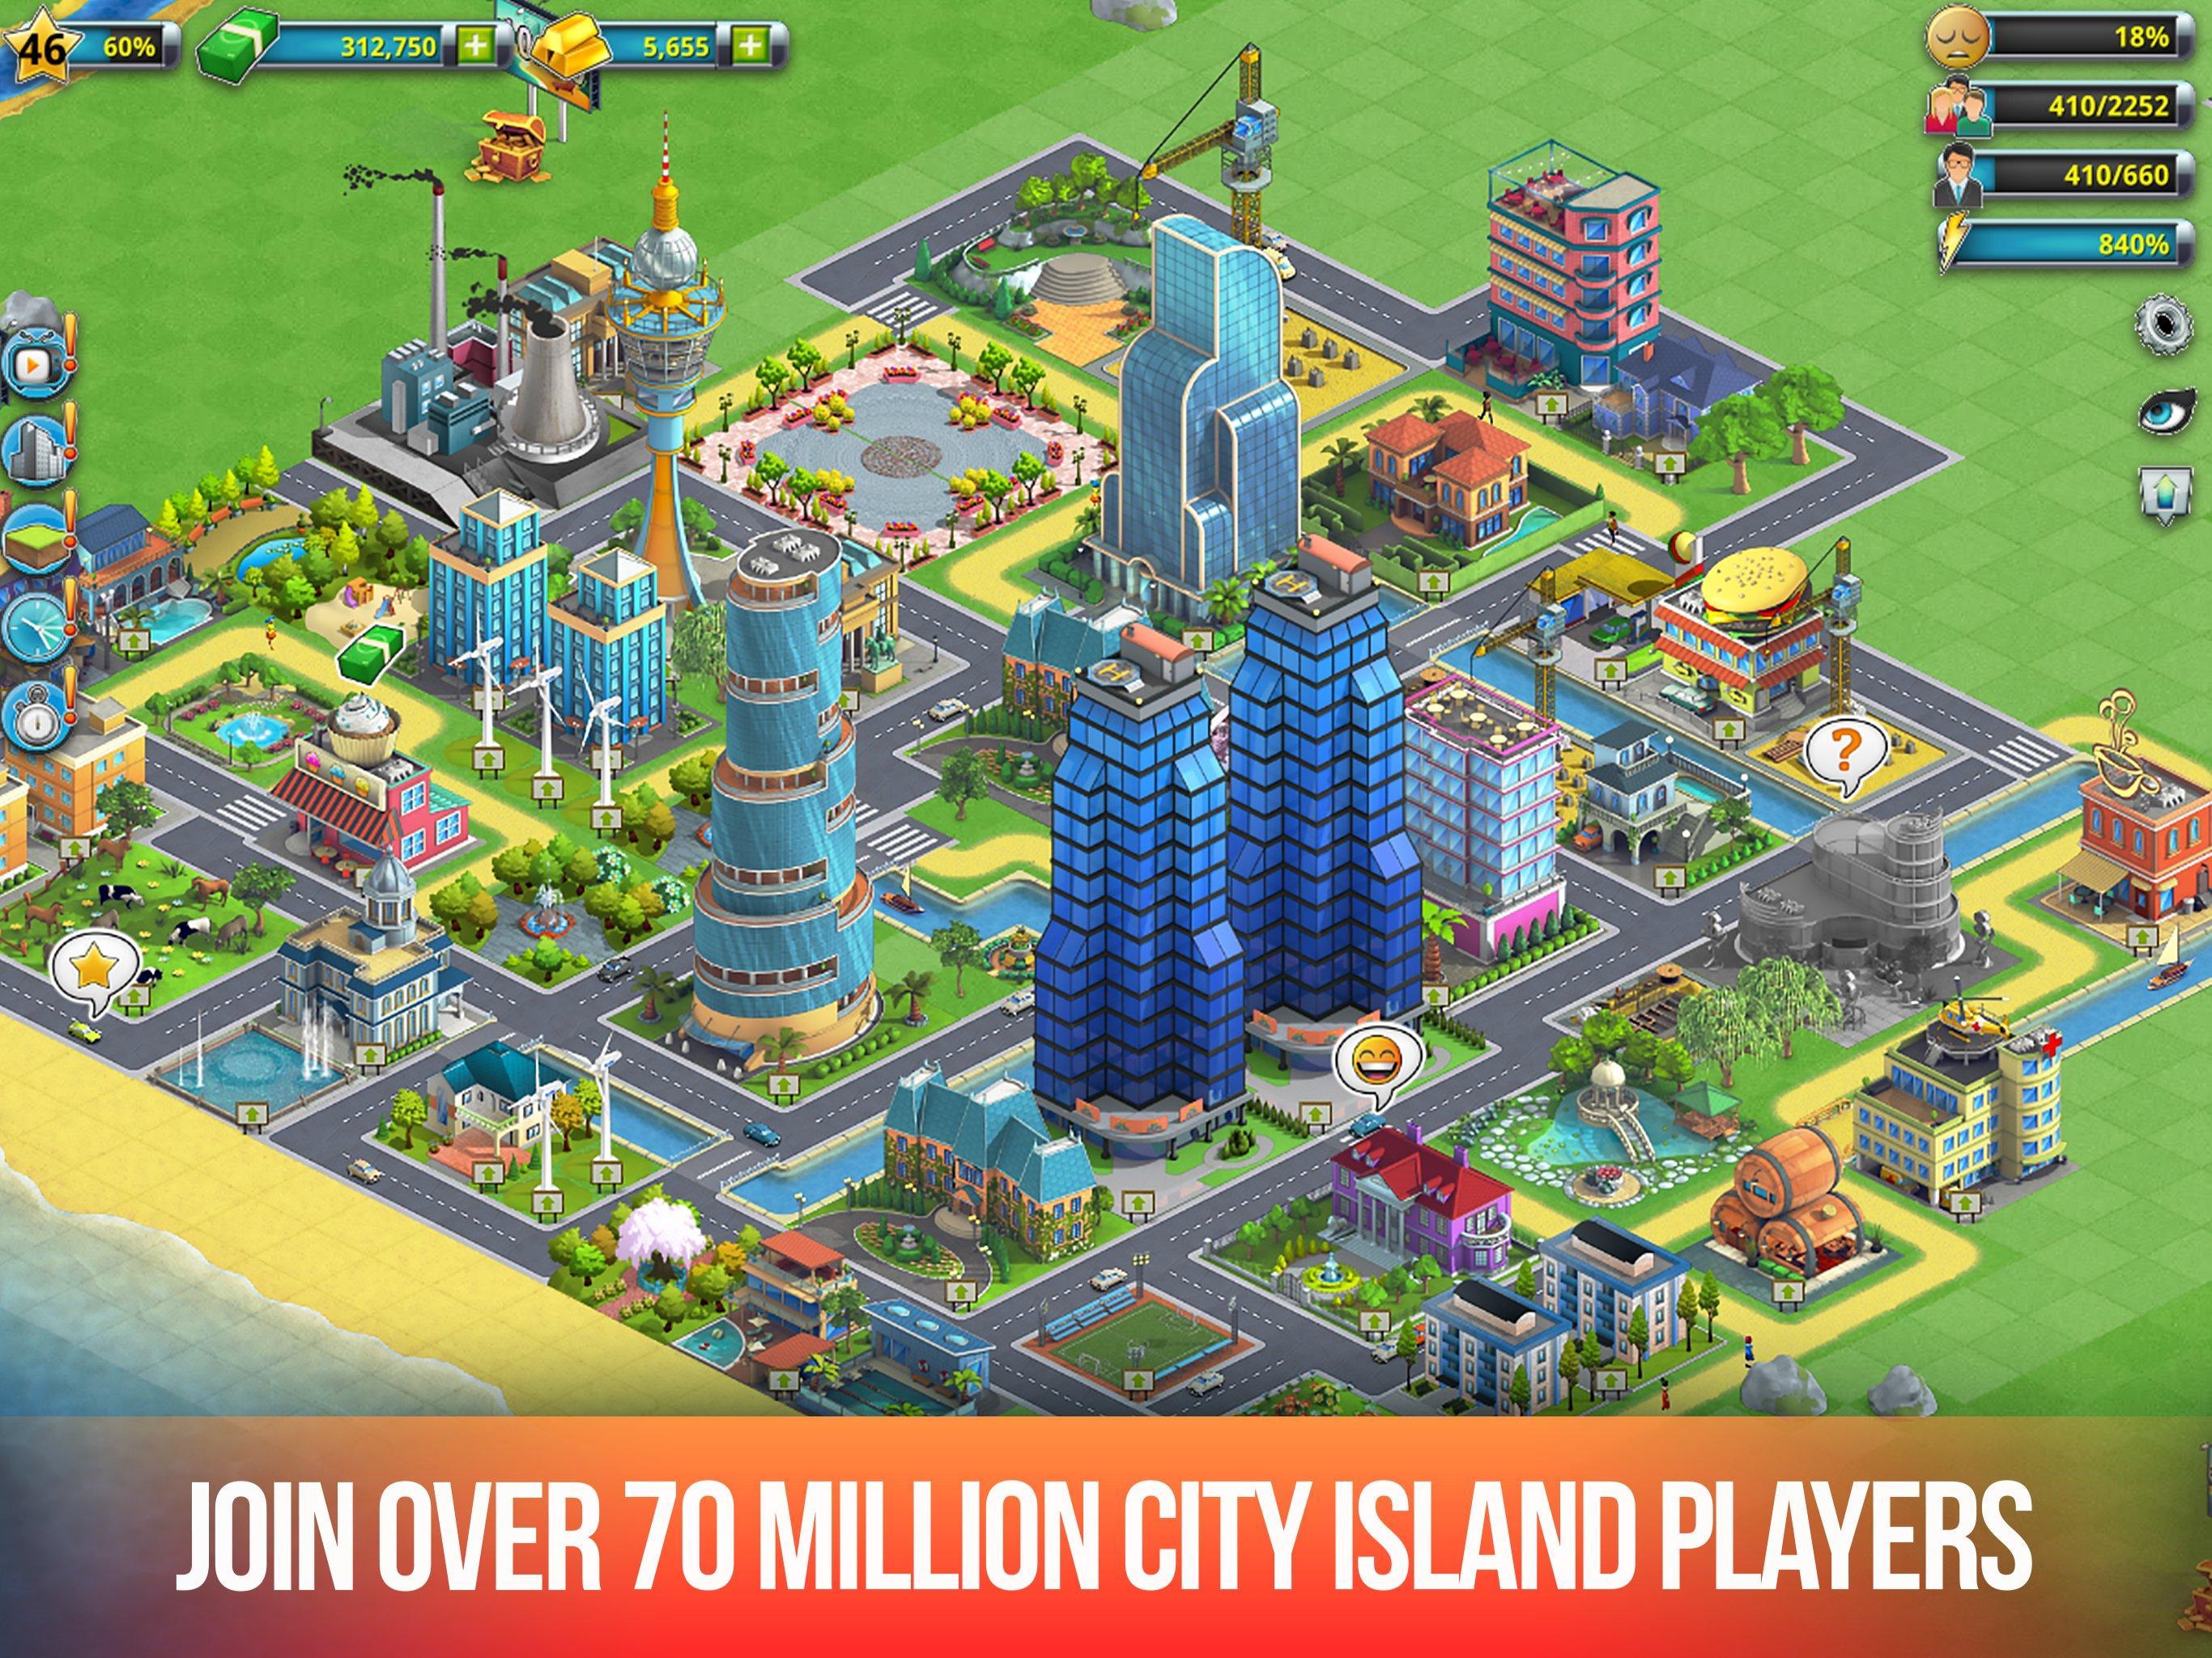 City Island 2 - Building Story (Offline sim game) for Android - APK